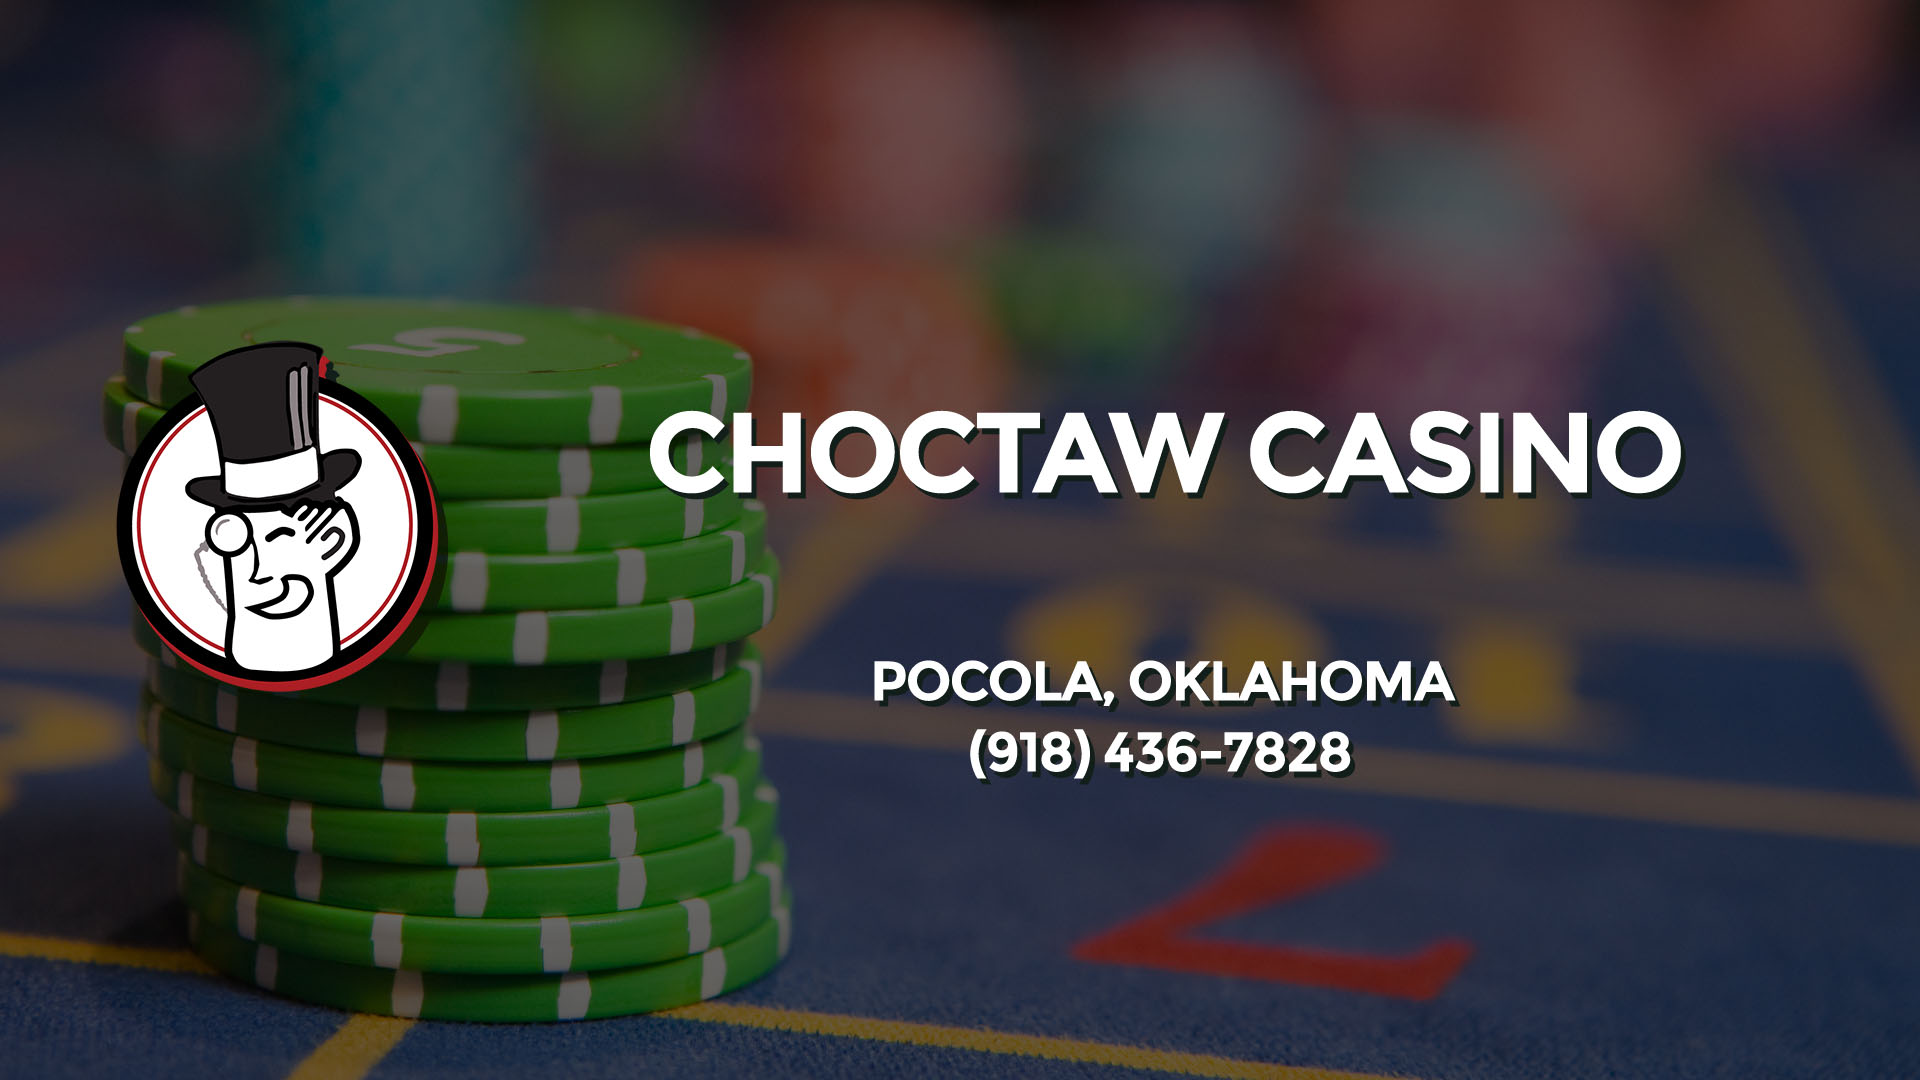 choctaw casino pocola reviews